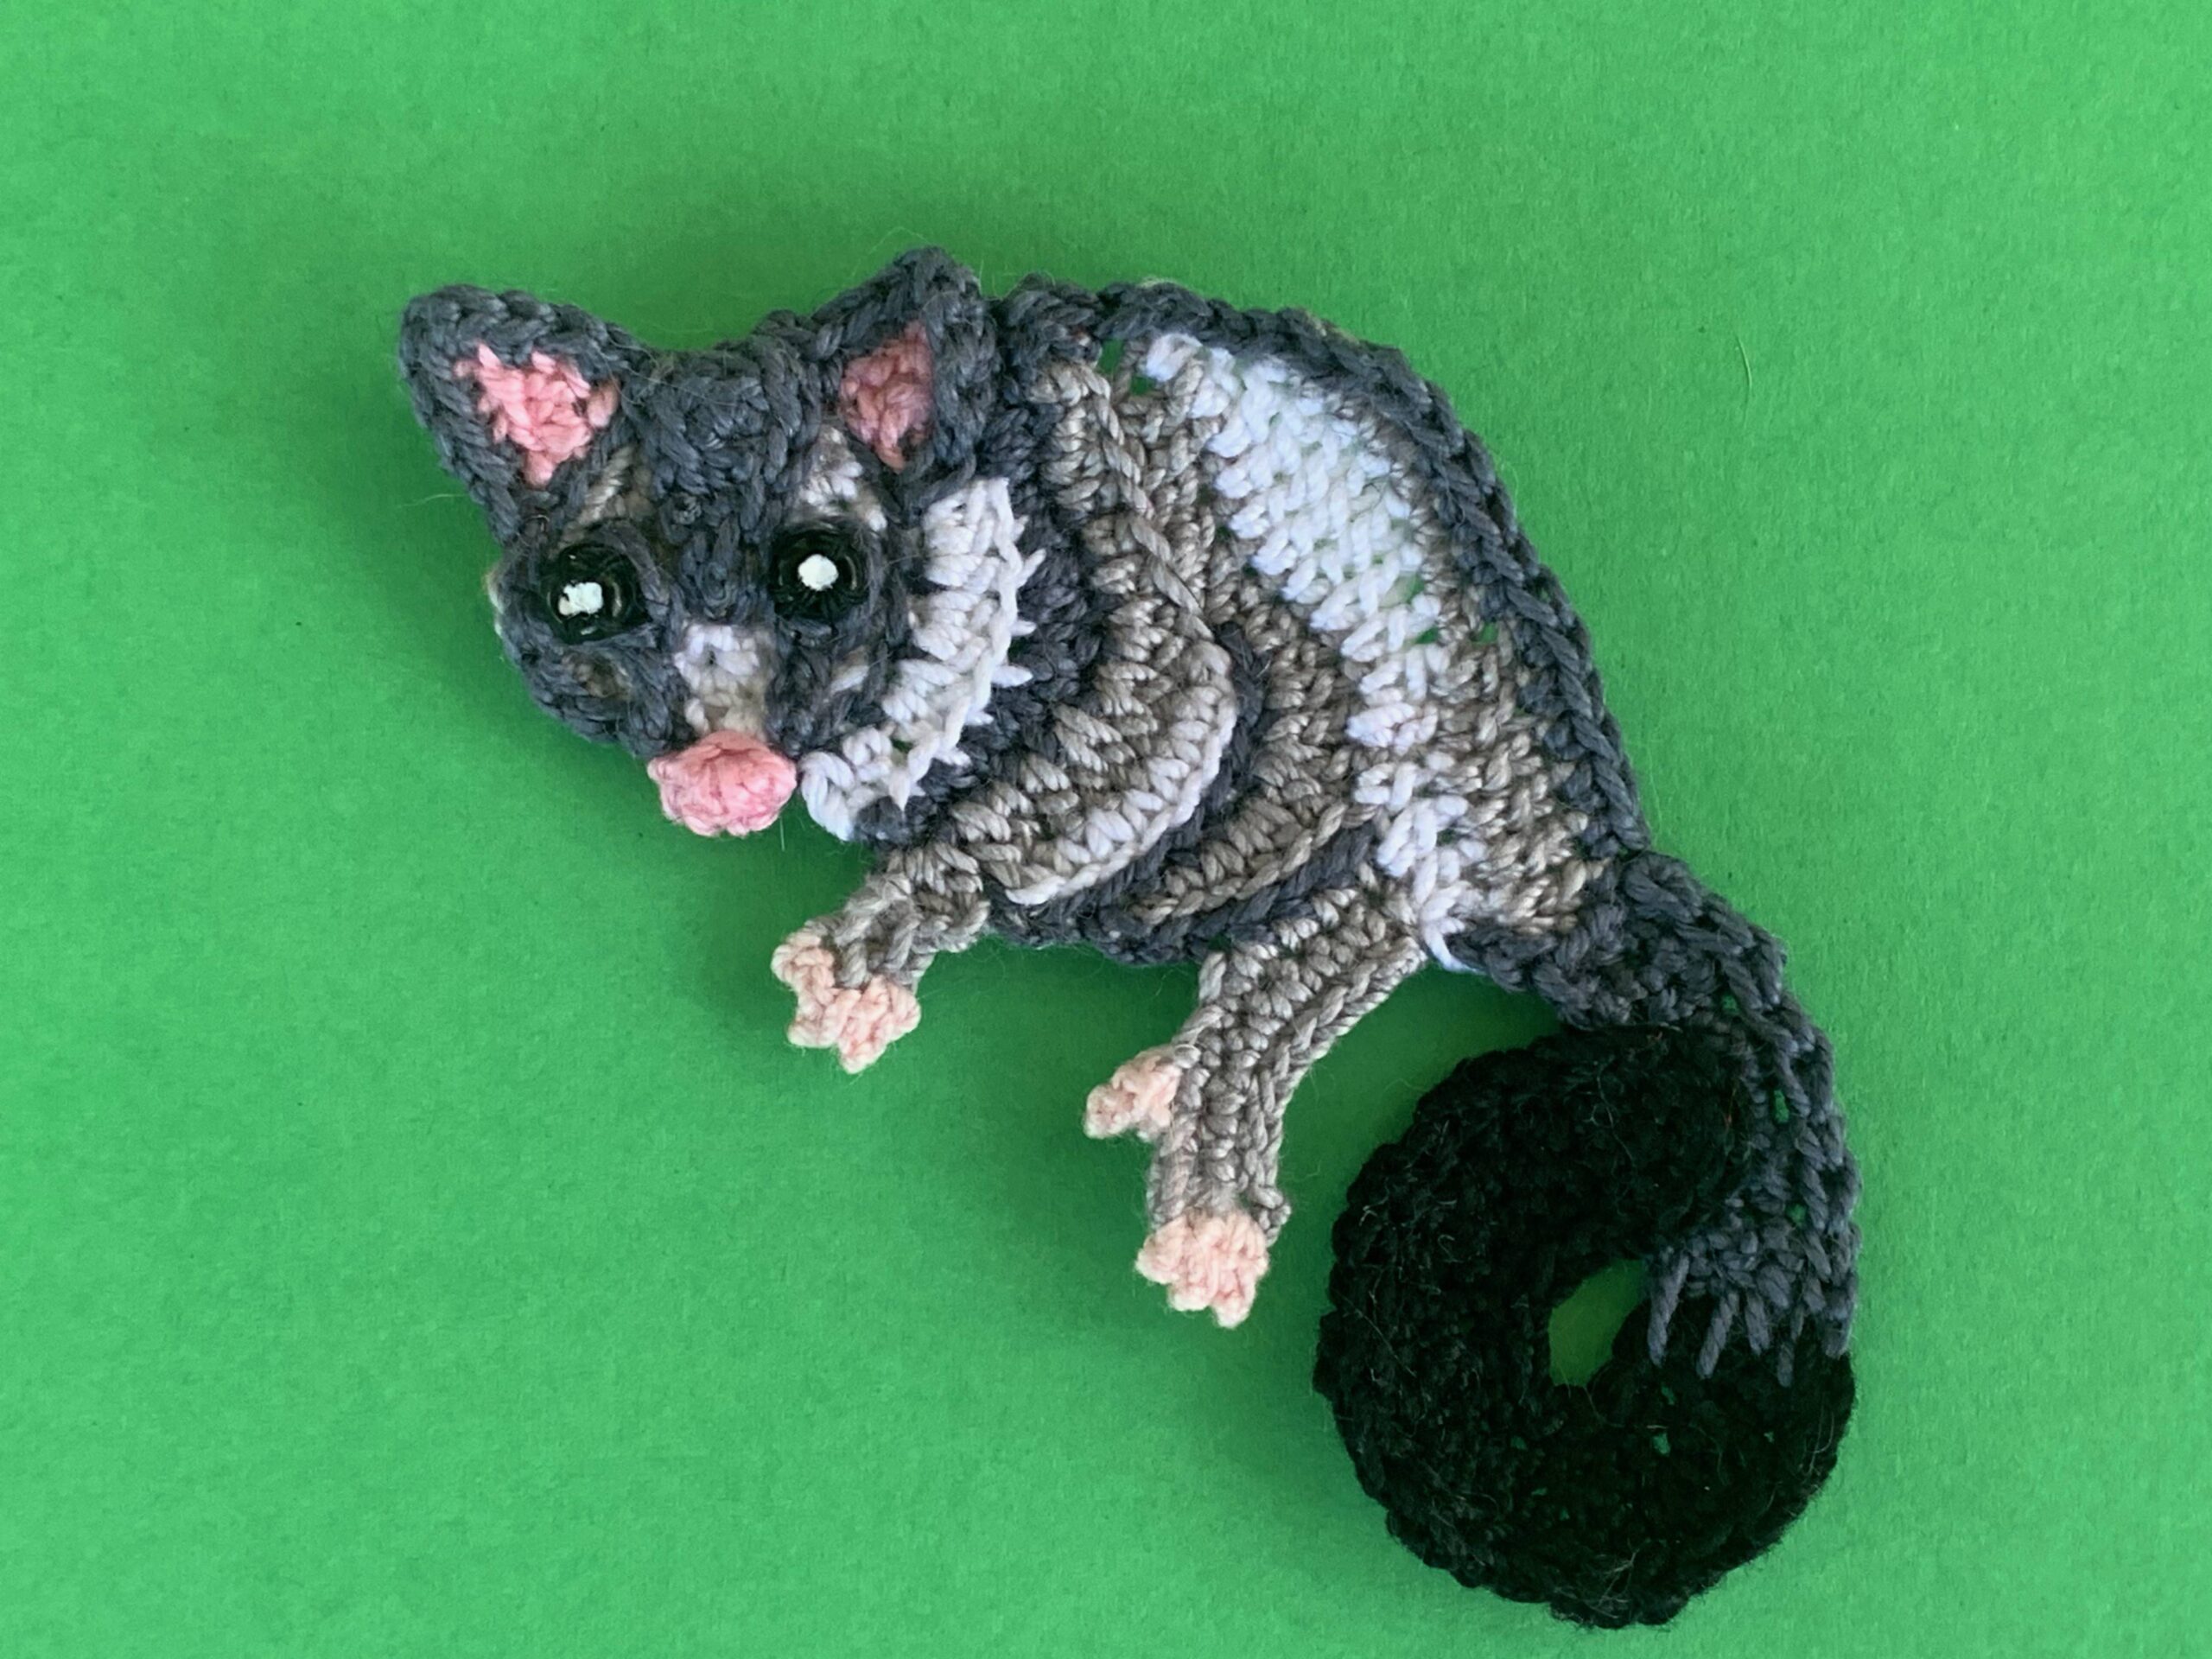 Finished crochet possum 2 ply landscape